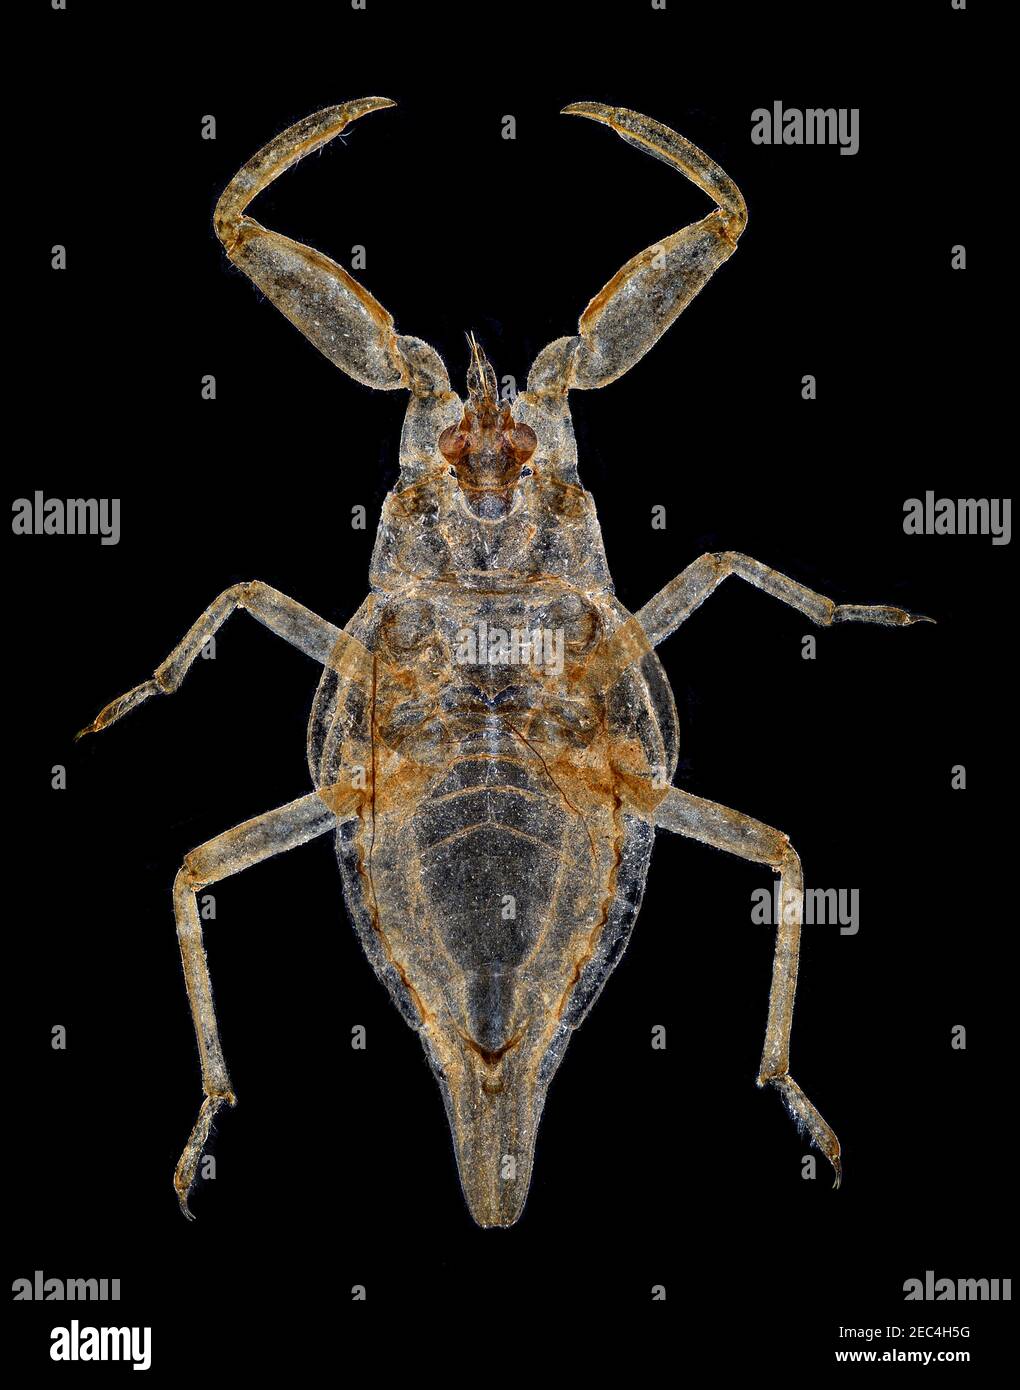 Water scorpion, Nepa cinerea, early stage nymph, darkfield illumination Stock Photo